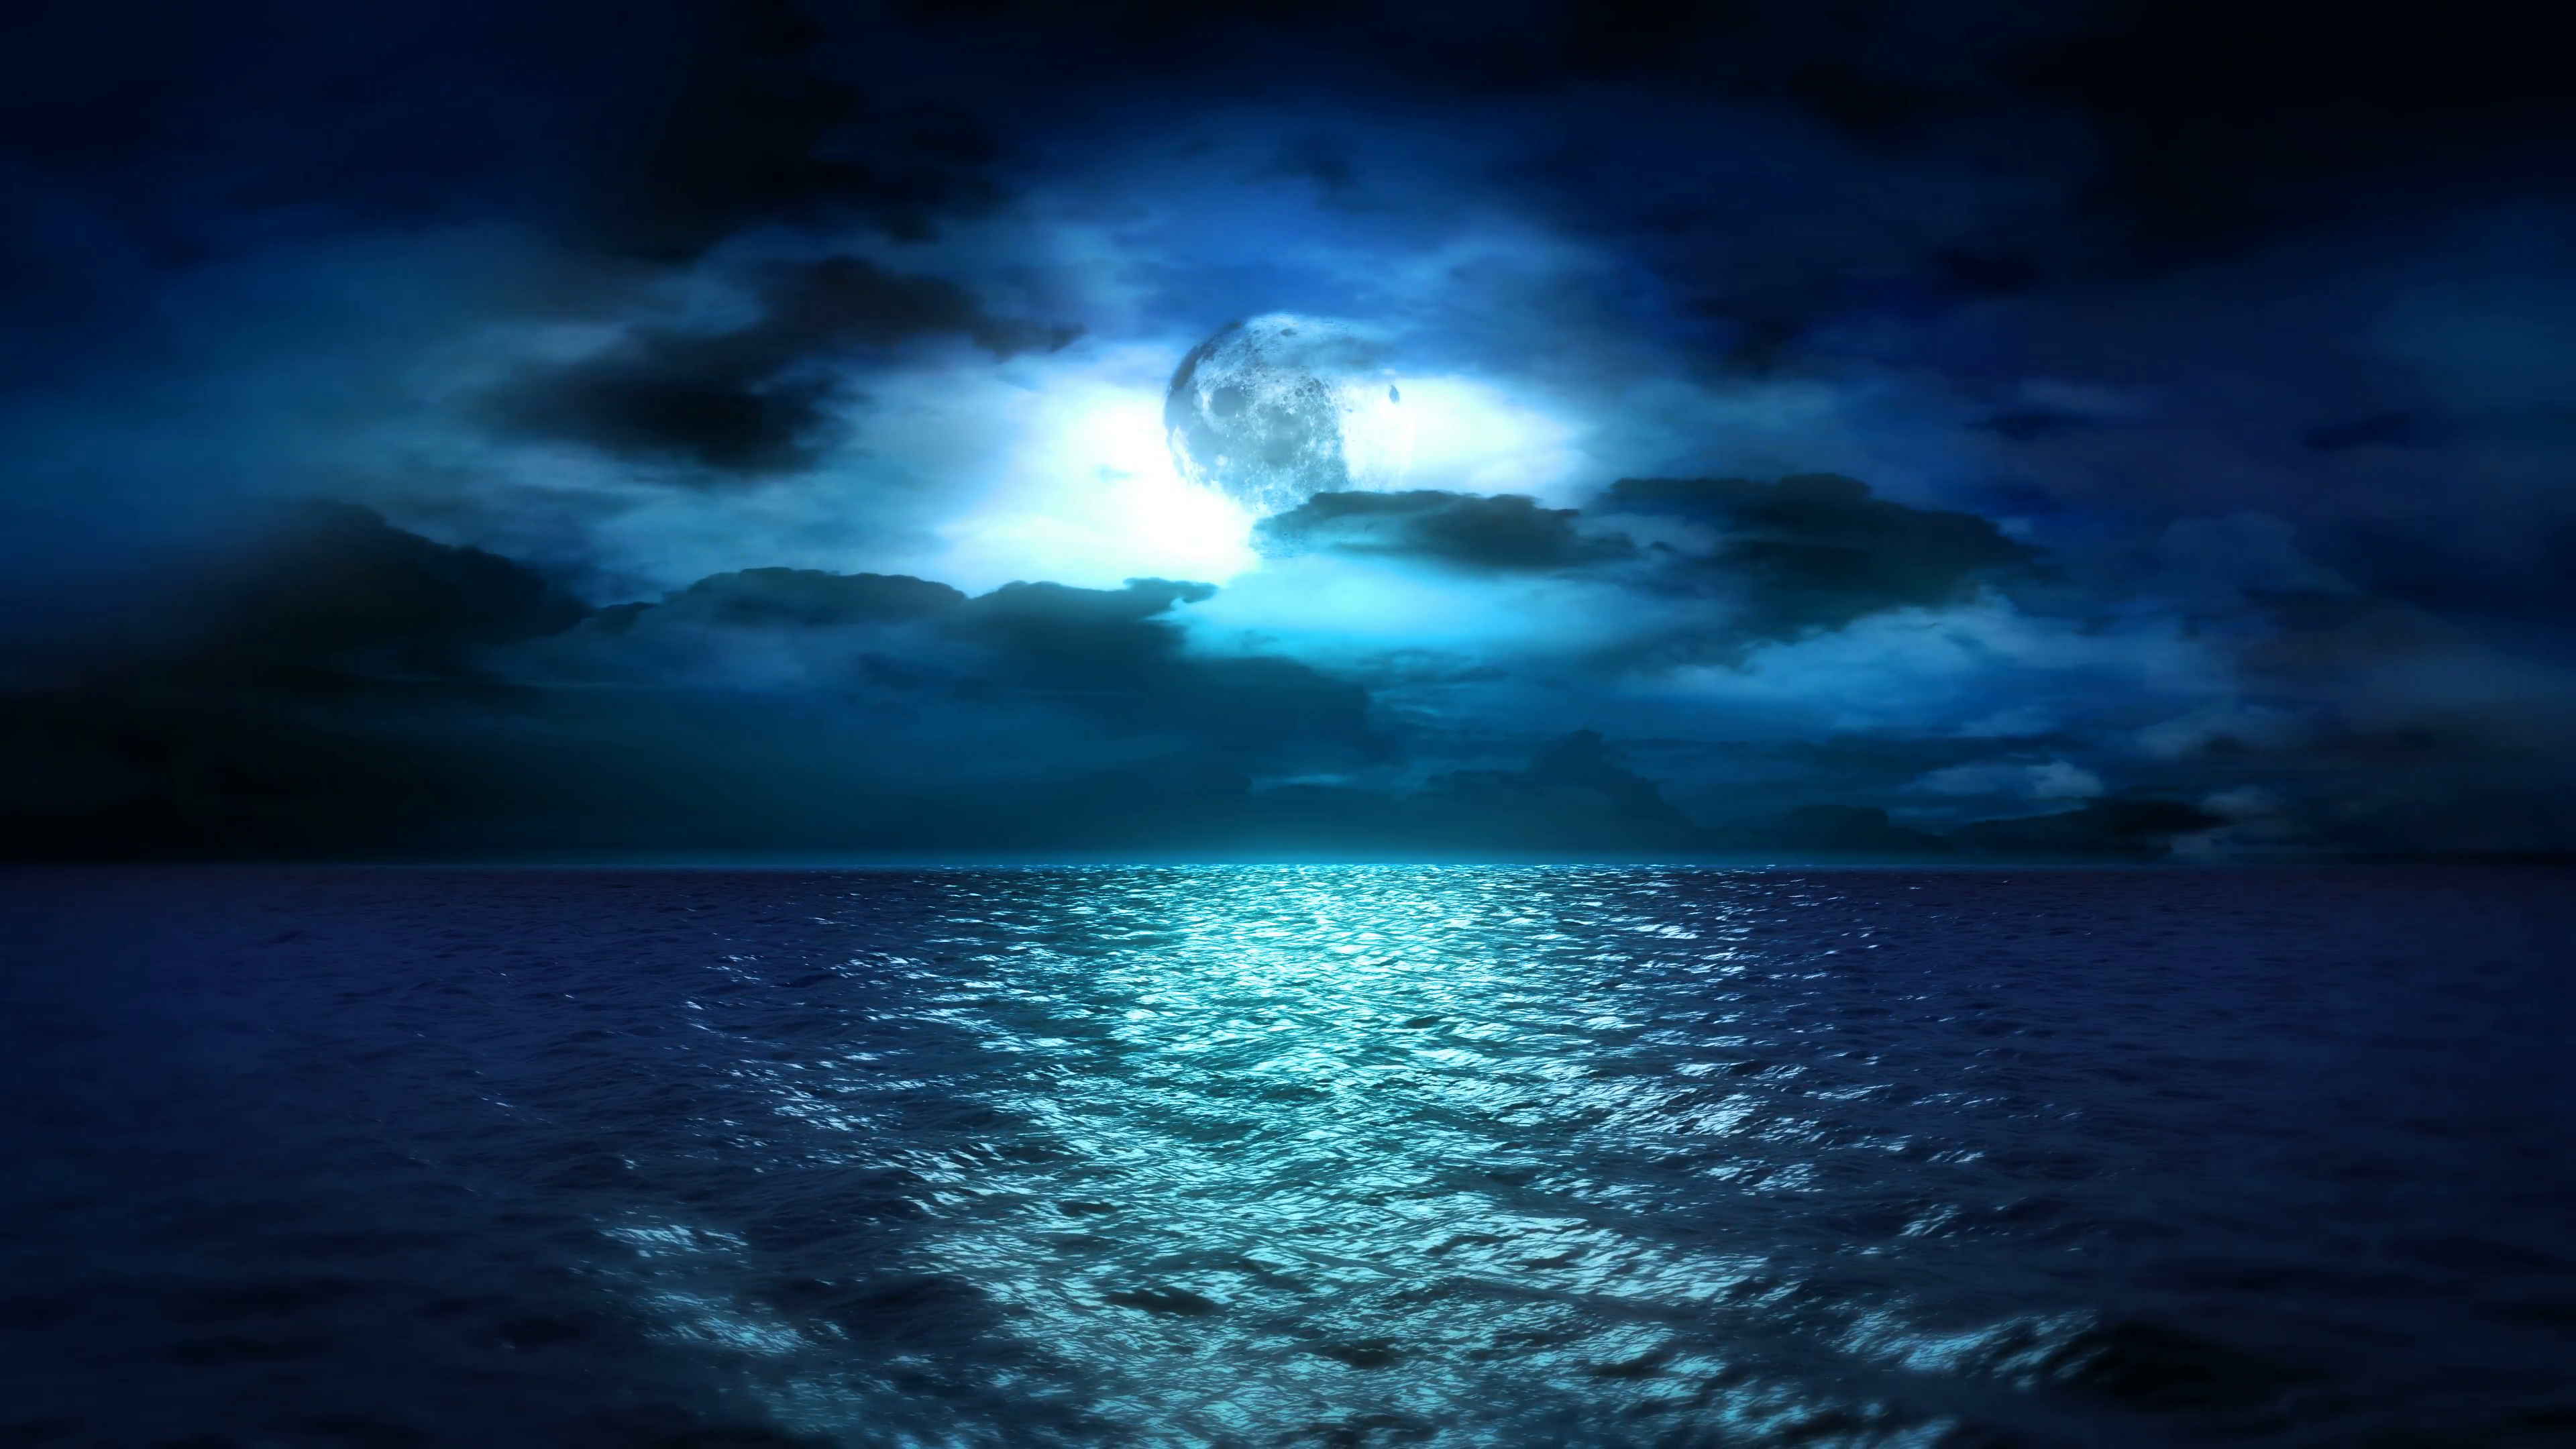 Ocean Moonlight and Clouds (Loop) Motion Background - Videoblocks